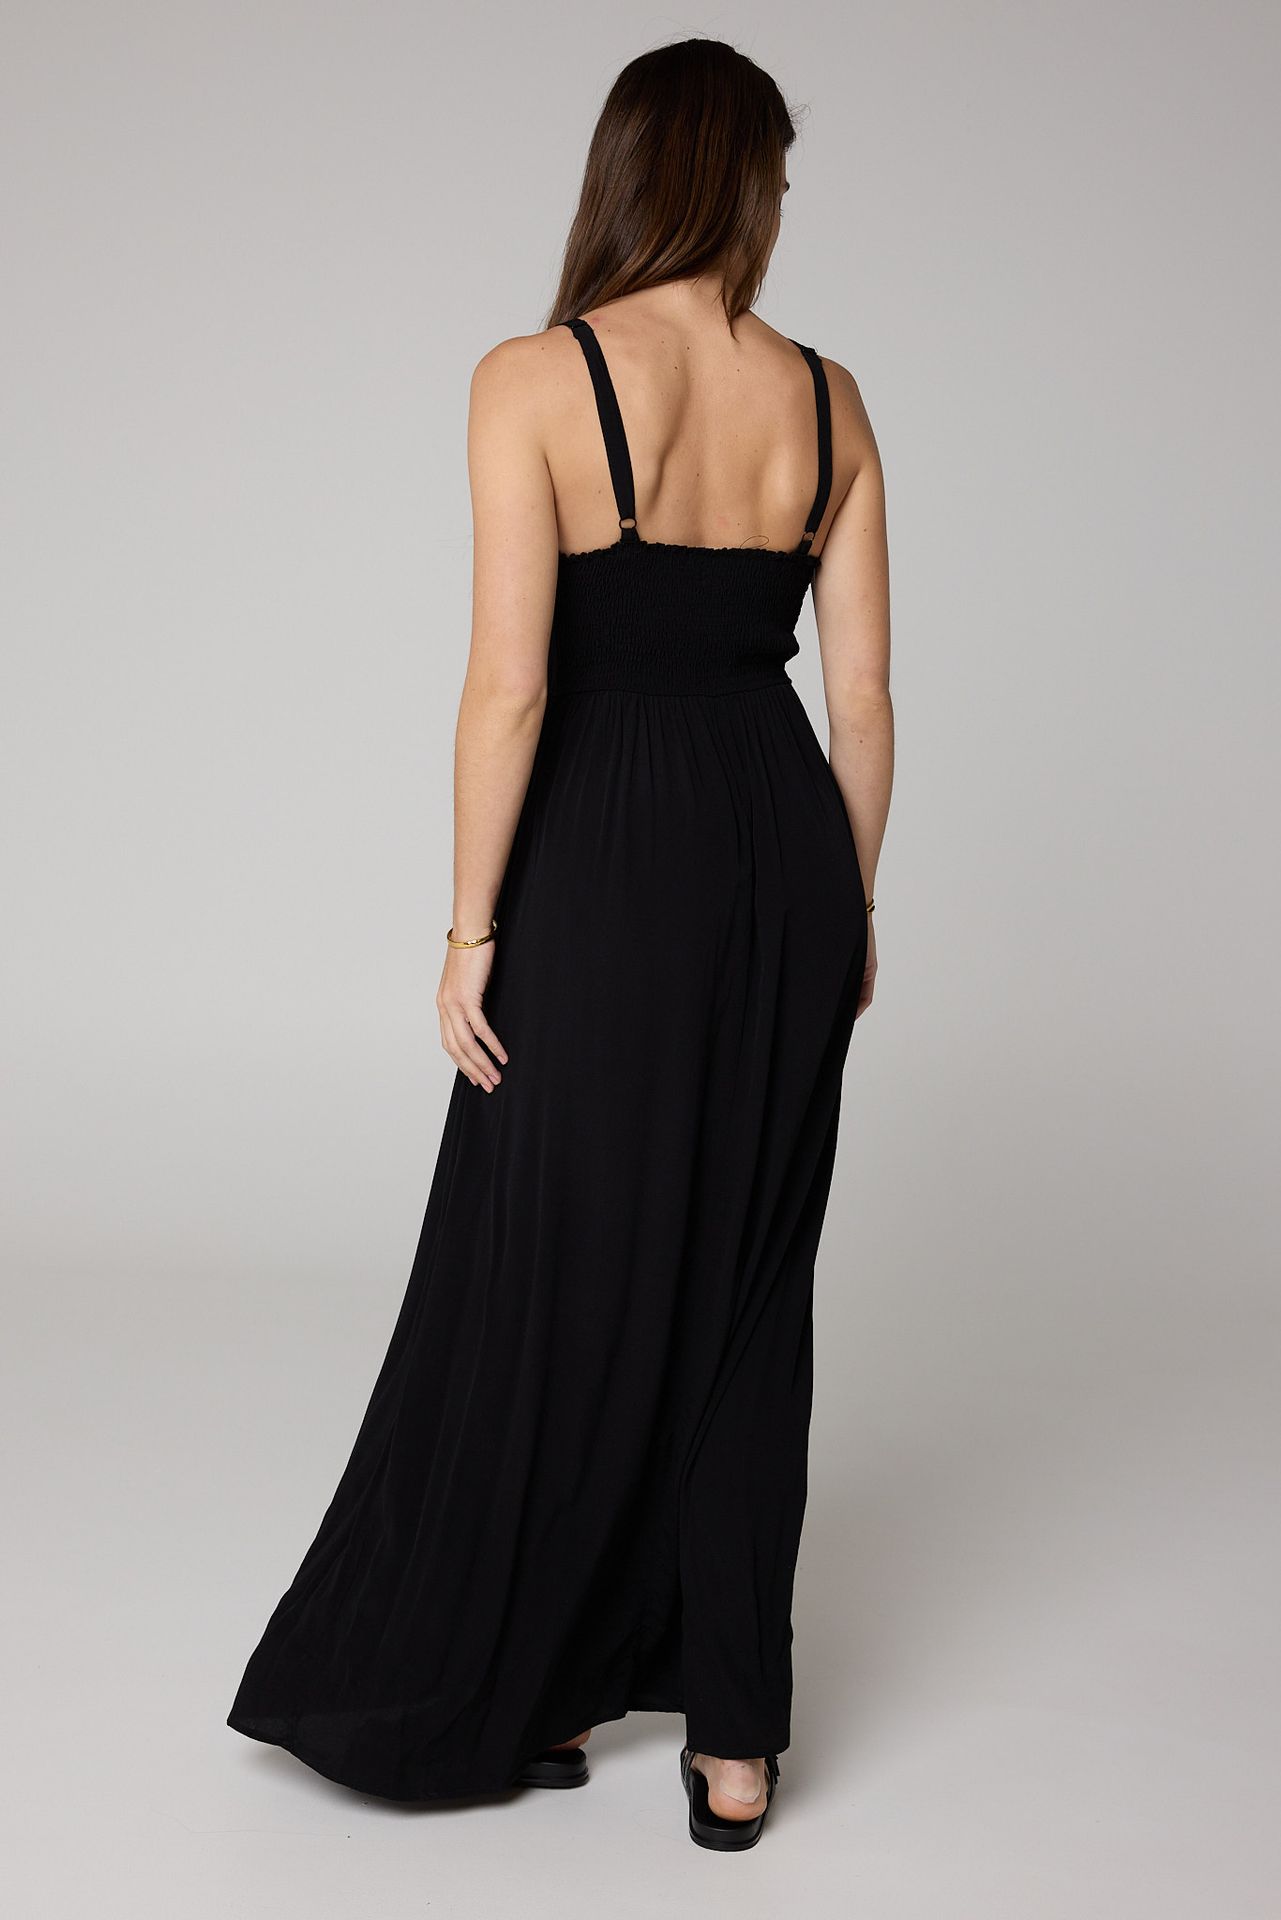 Norah Maxi jurk zwart black 213963-001